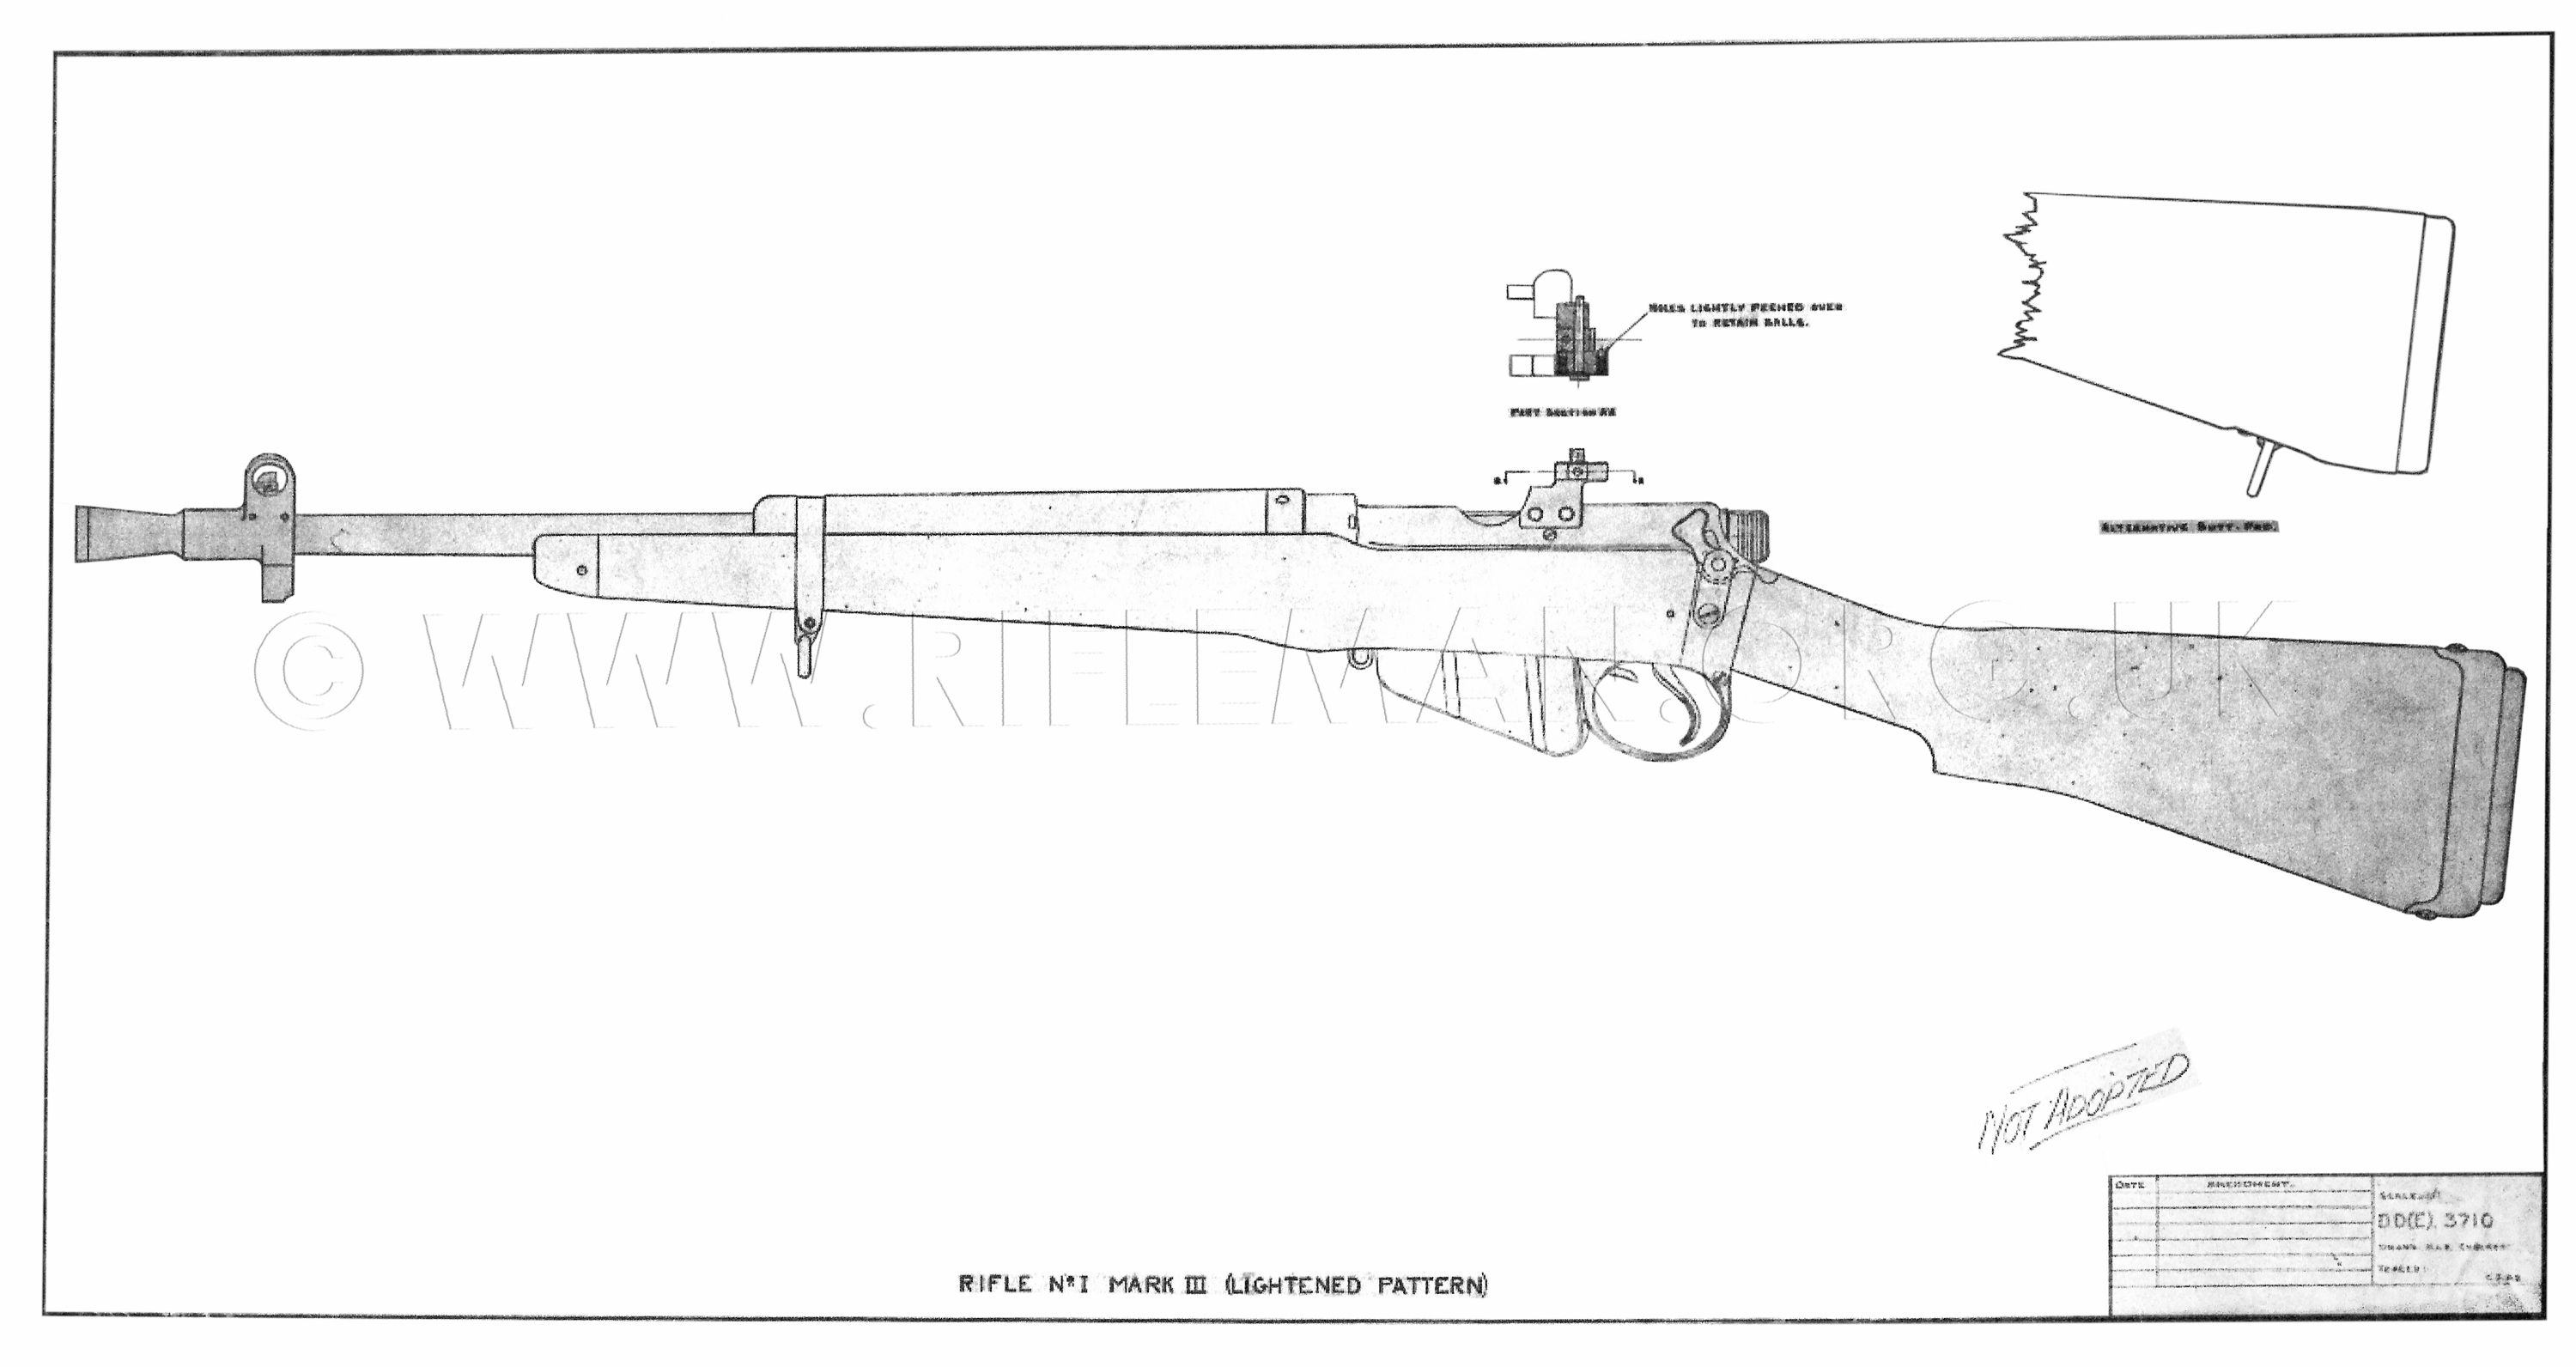 Lee Enfield SMLE No. MK4 303 British Rifle rifle parts, stock and bolt